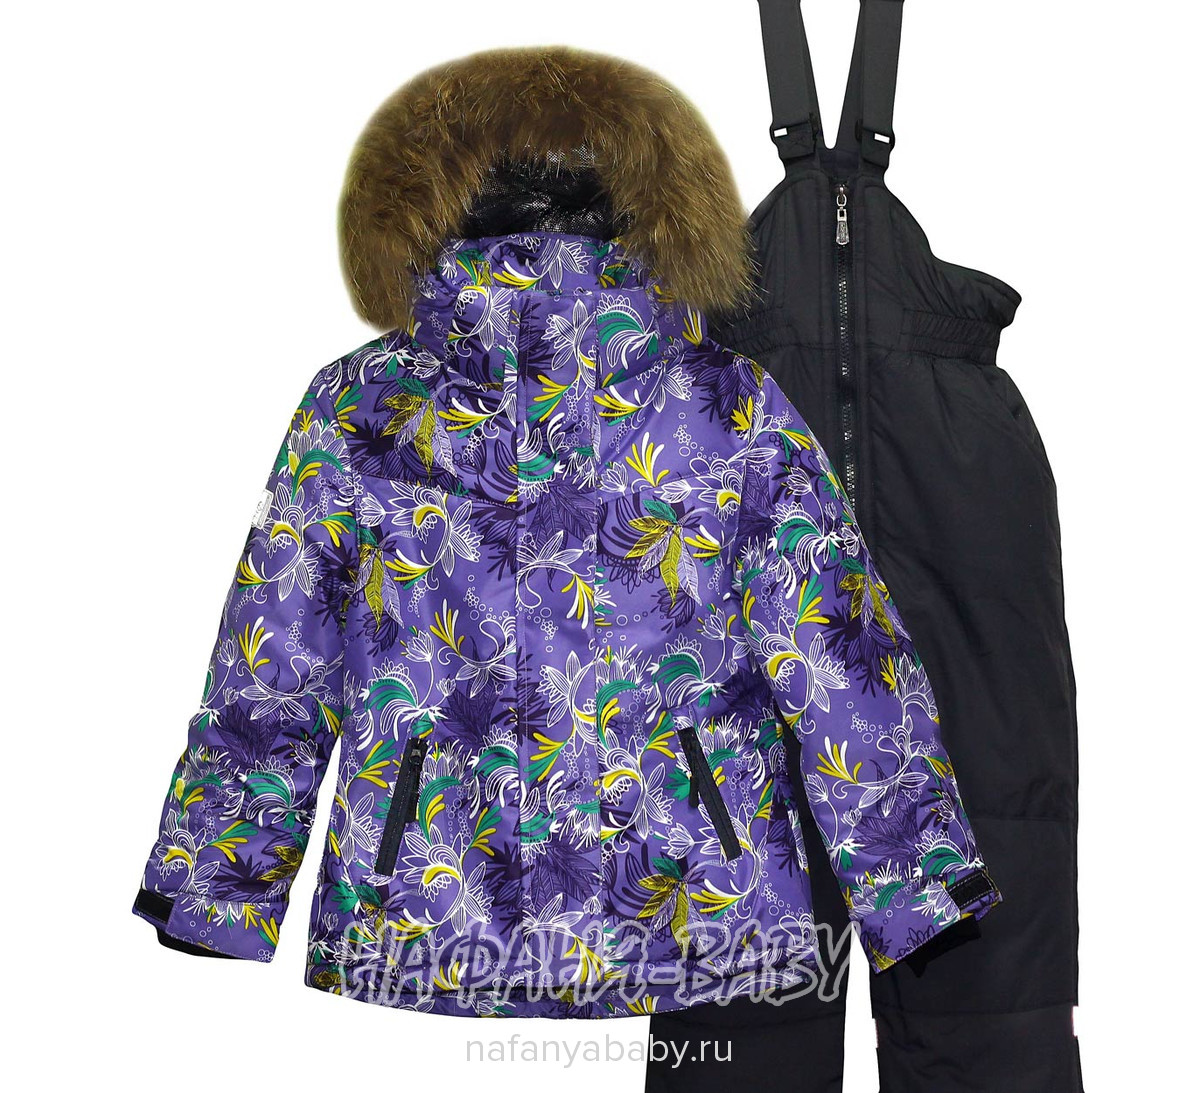 Зимний костюм (куртка+полукомбинезон)  COKOTU арт: 1973, 5-9 лет, оптом Китай (Пекин)